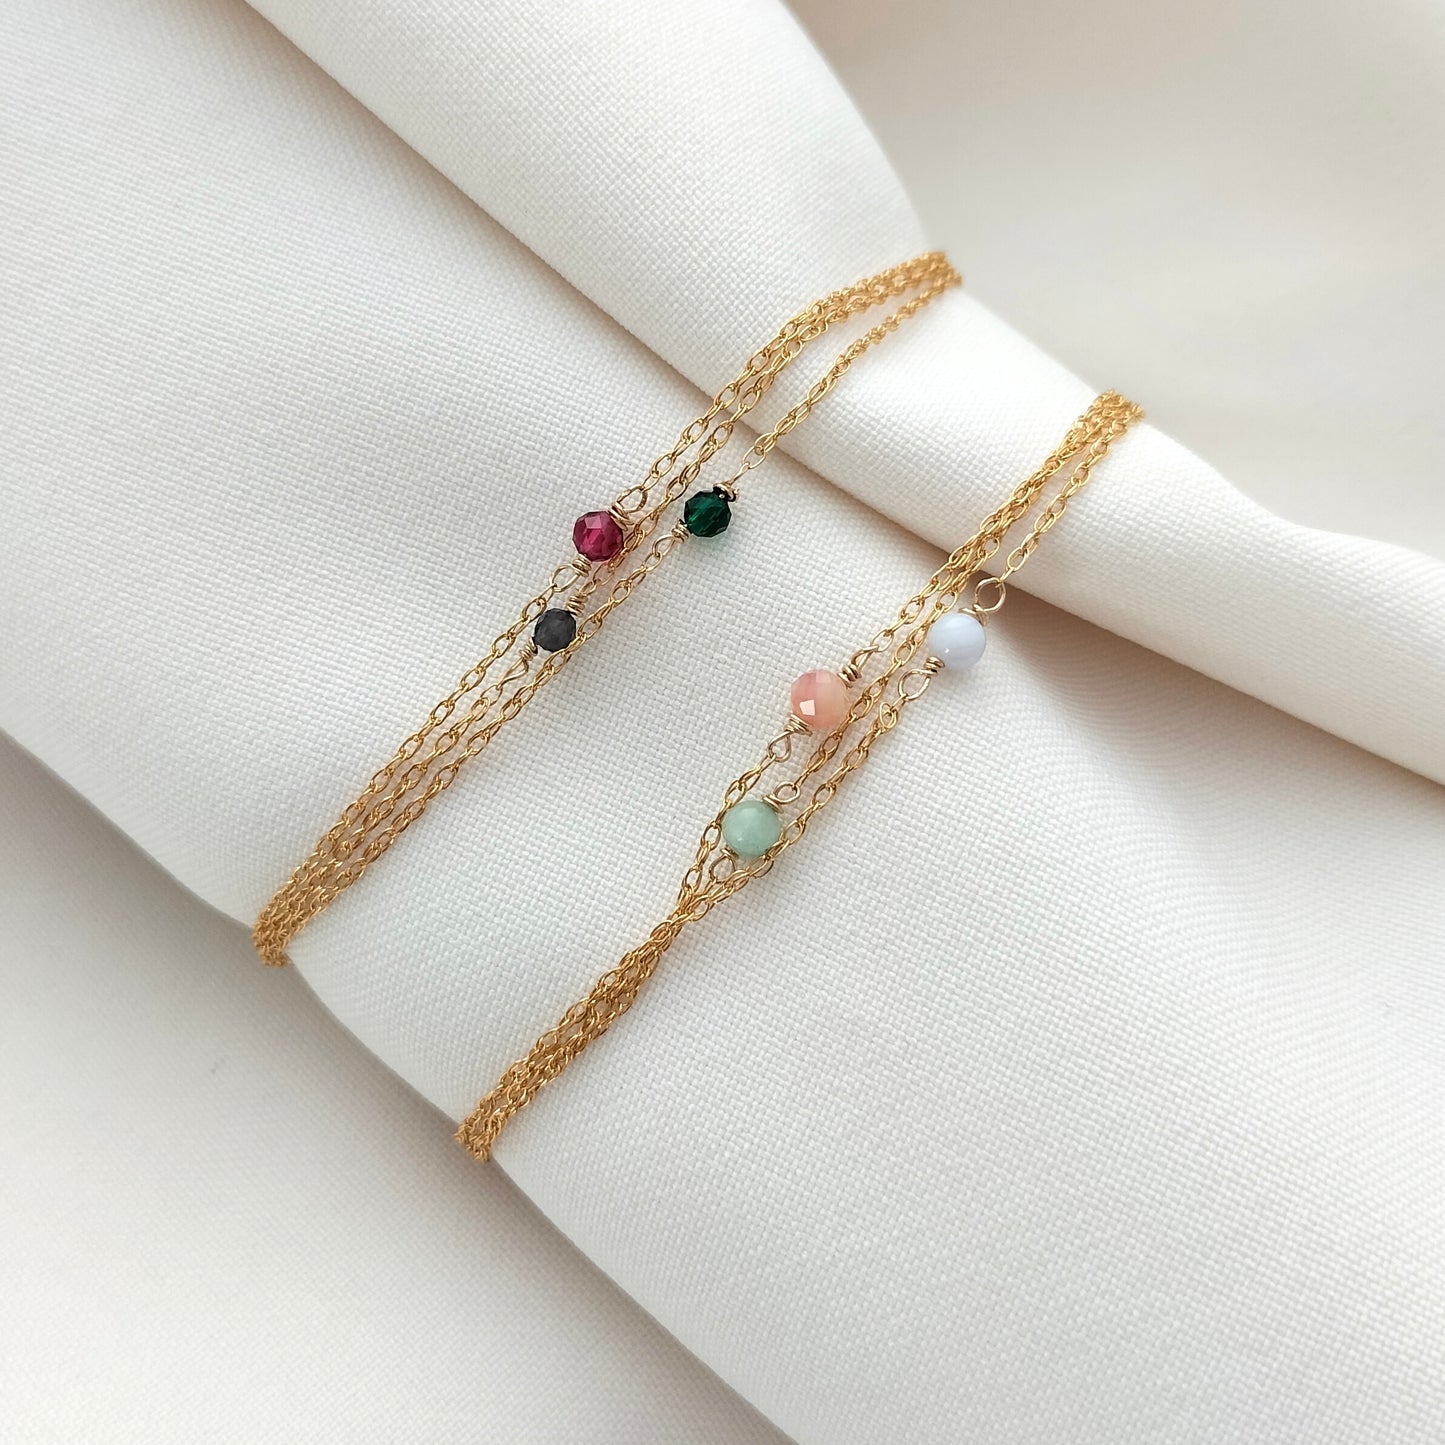 Triple strand gemstone bracelet